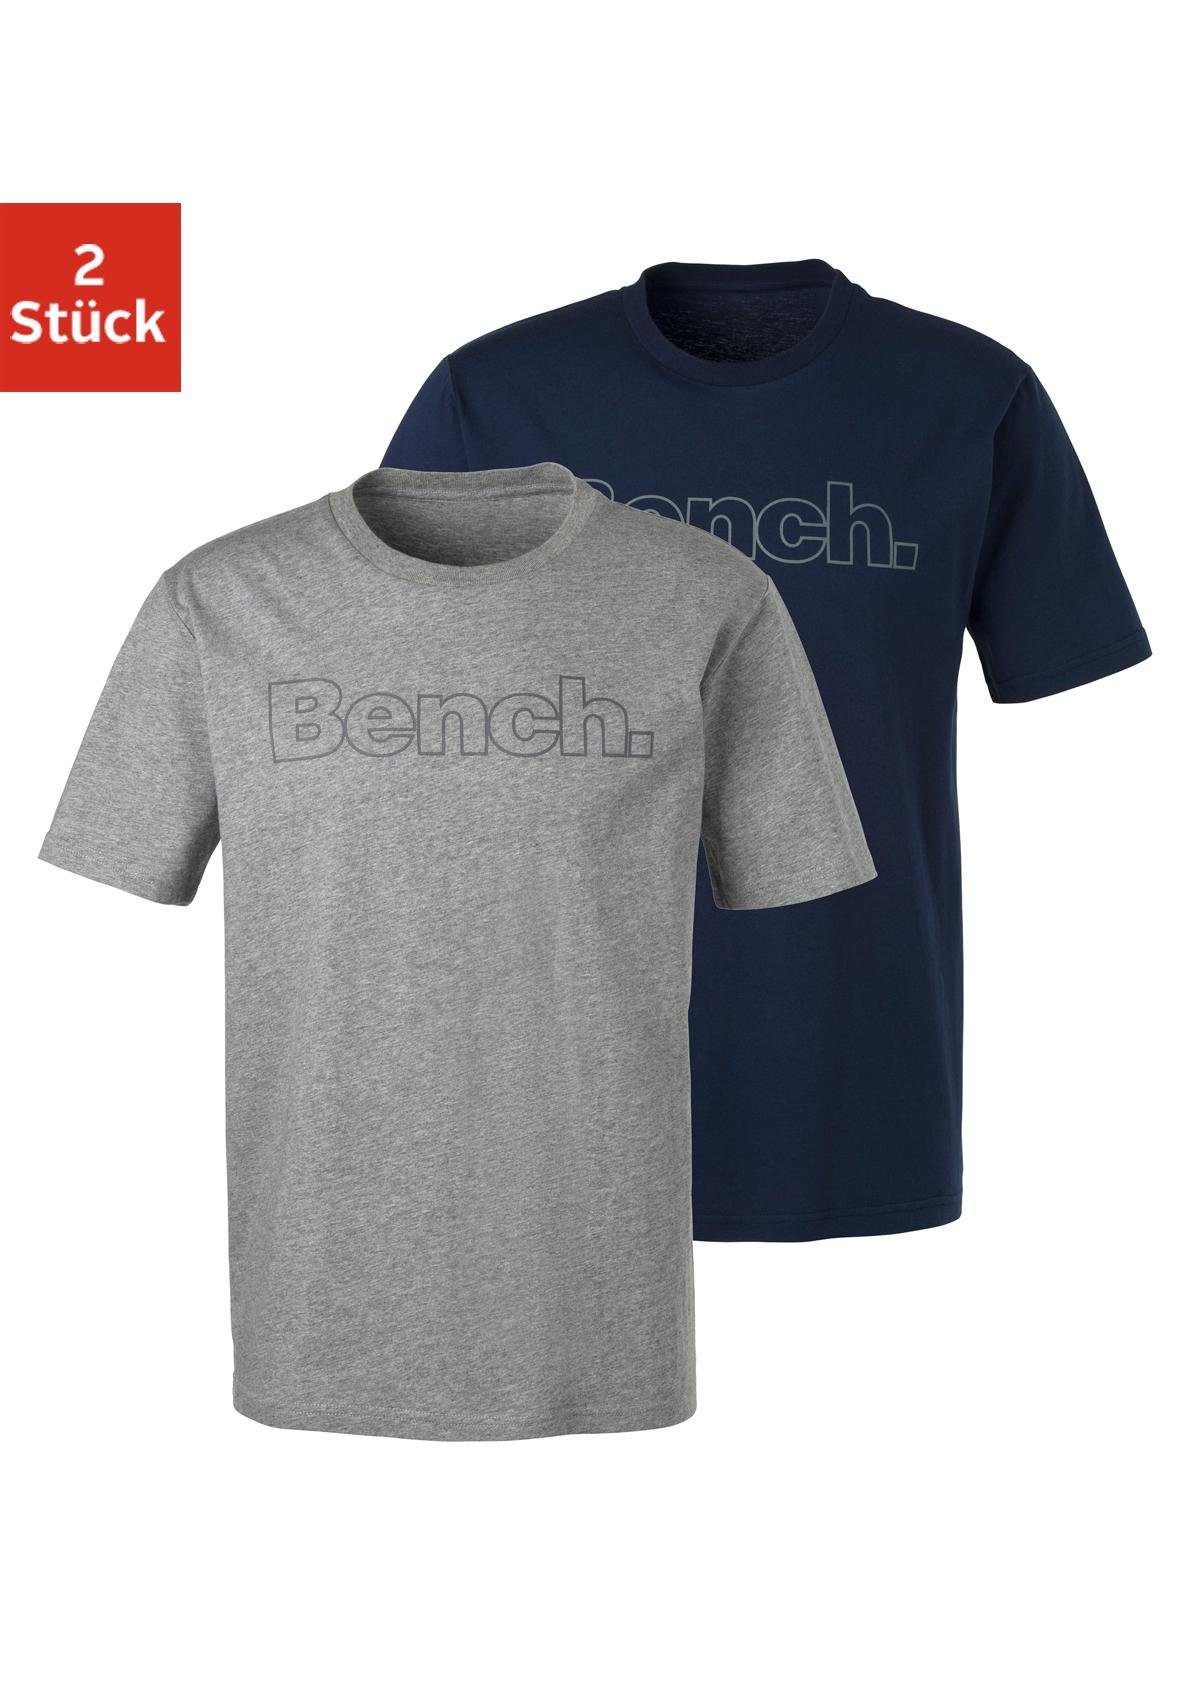 Bench. Loungewear T-Shirt (2-tlg) mit Bench. Print vorn grau-meliert, navy | T-Shirts